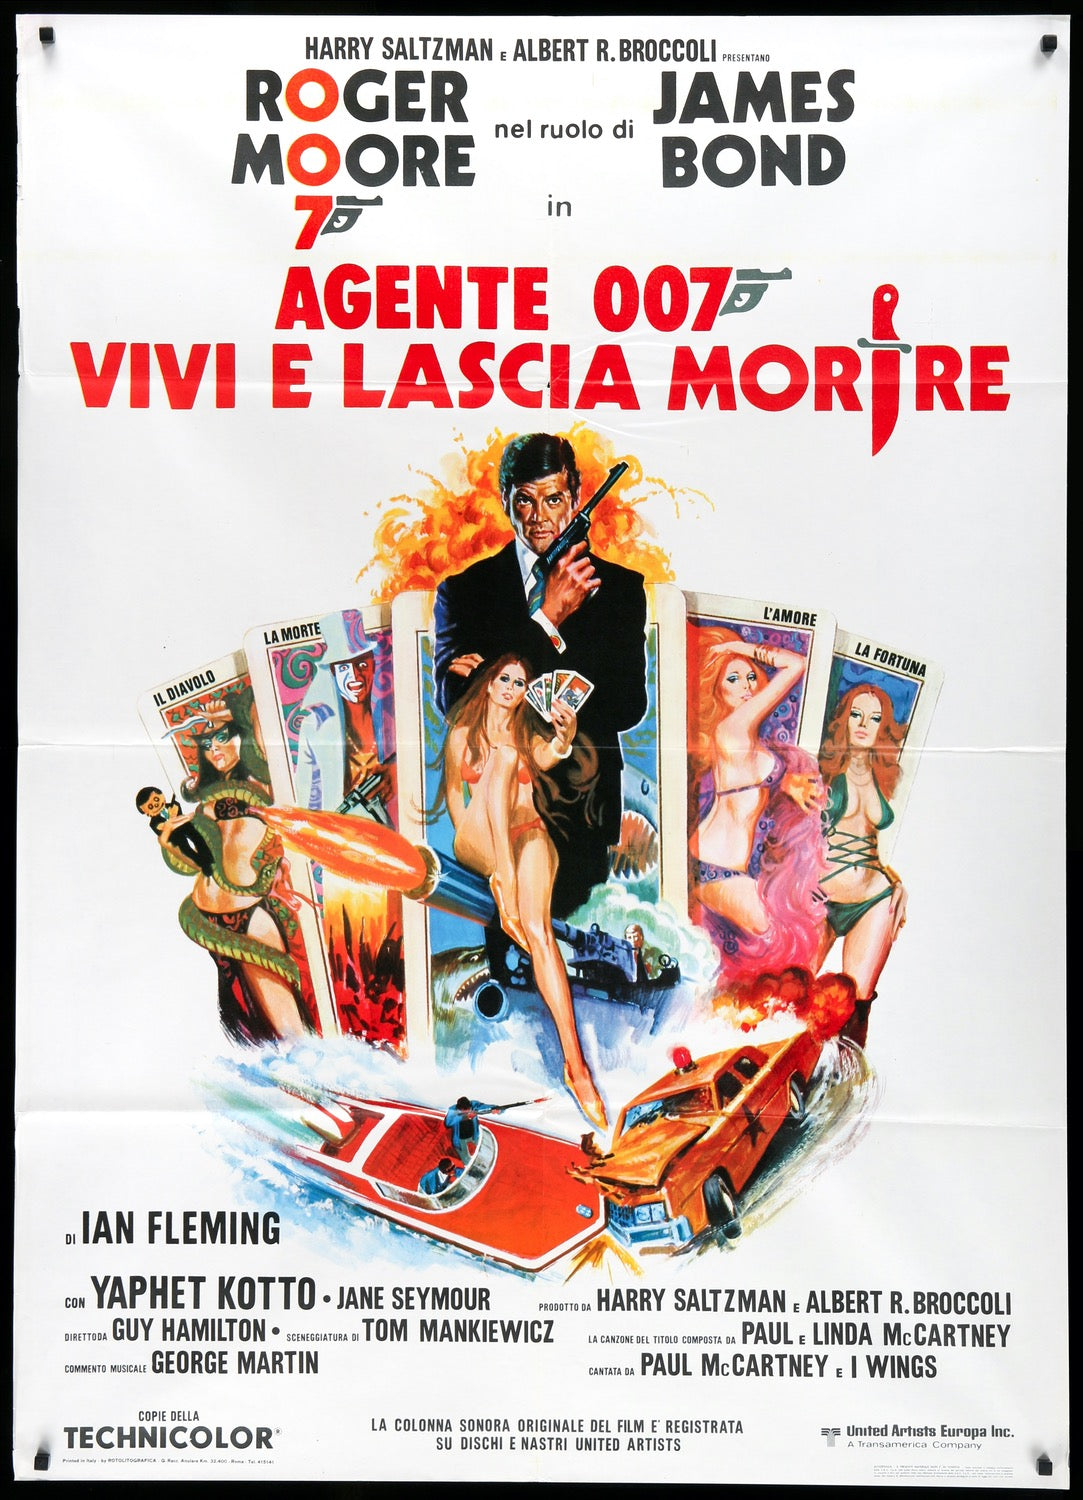 Live and Let Die (1973) original movie poster for sale at Original Film Art